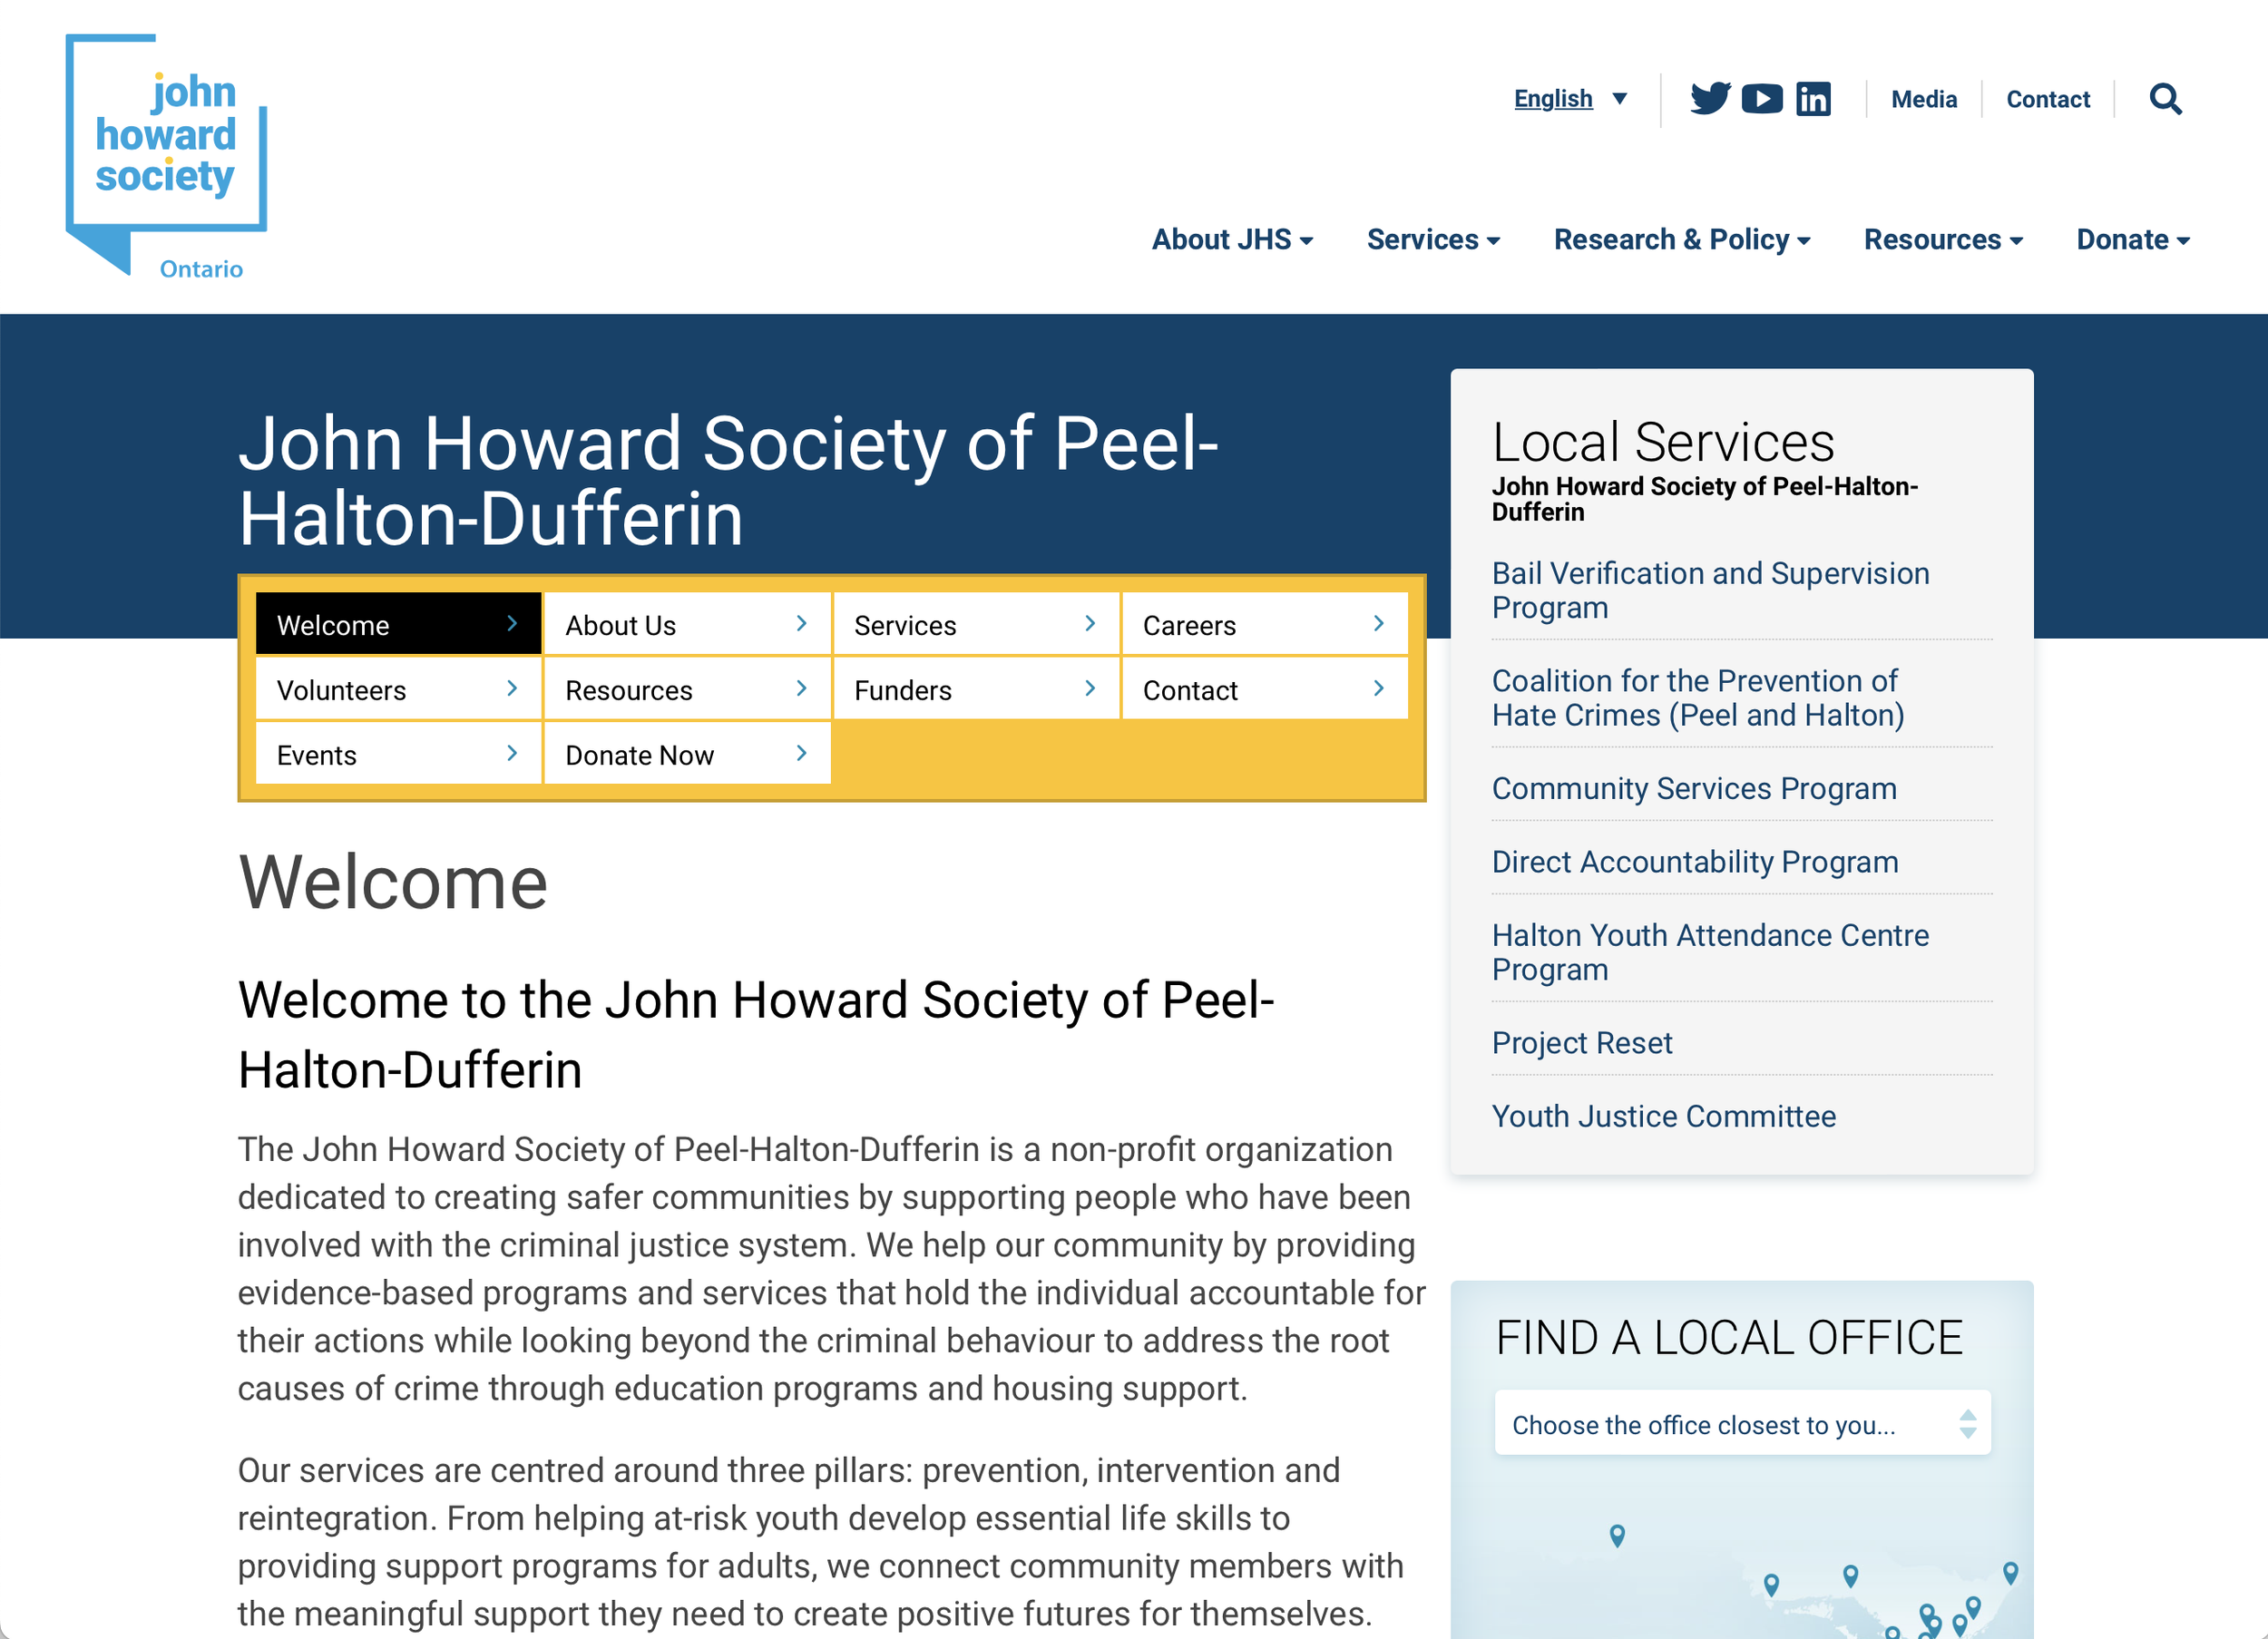 John Howard Society of Peel-Halton-Dufferin